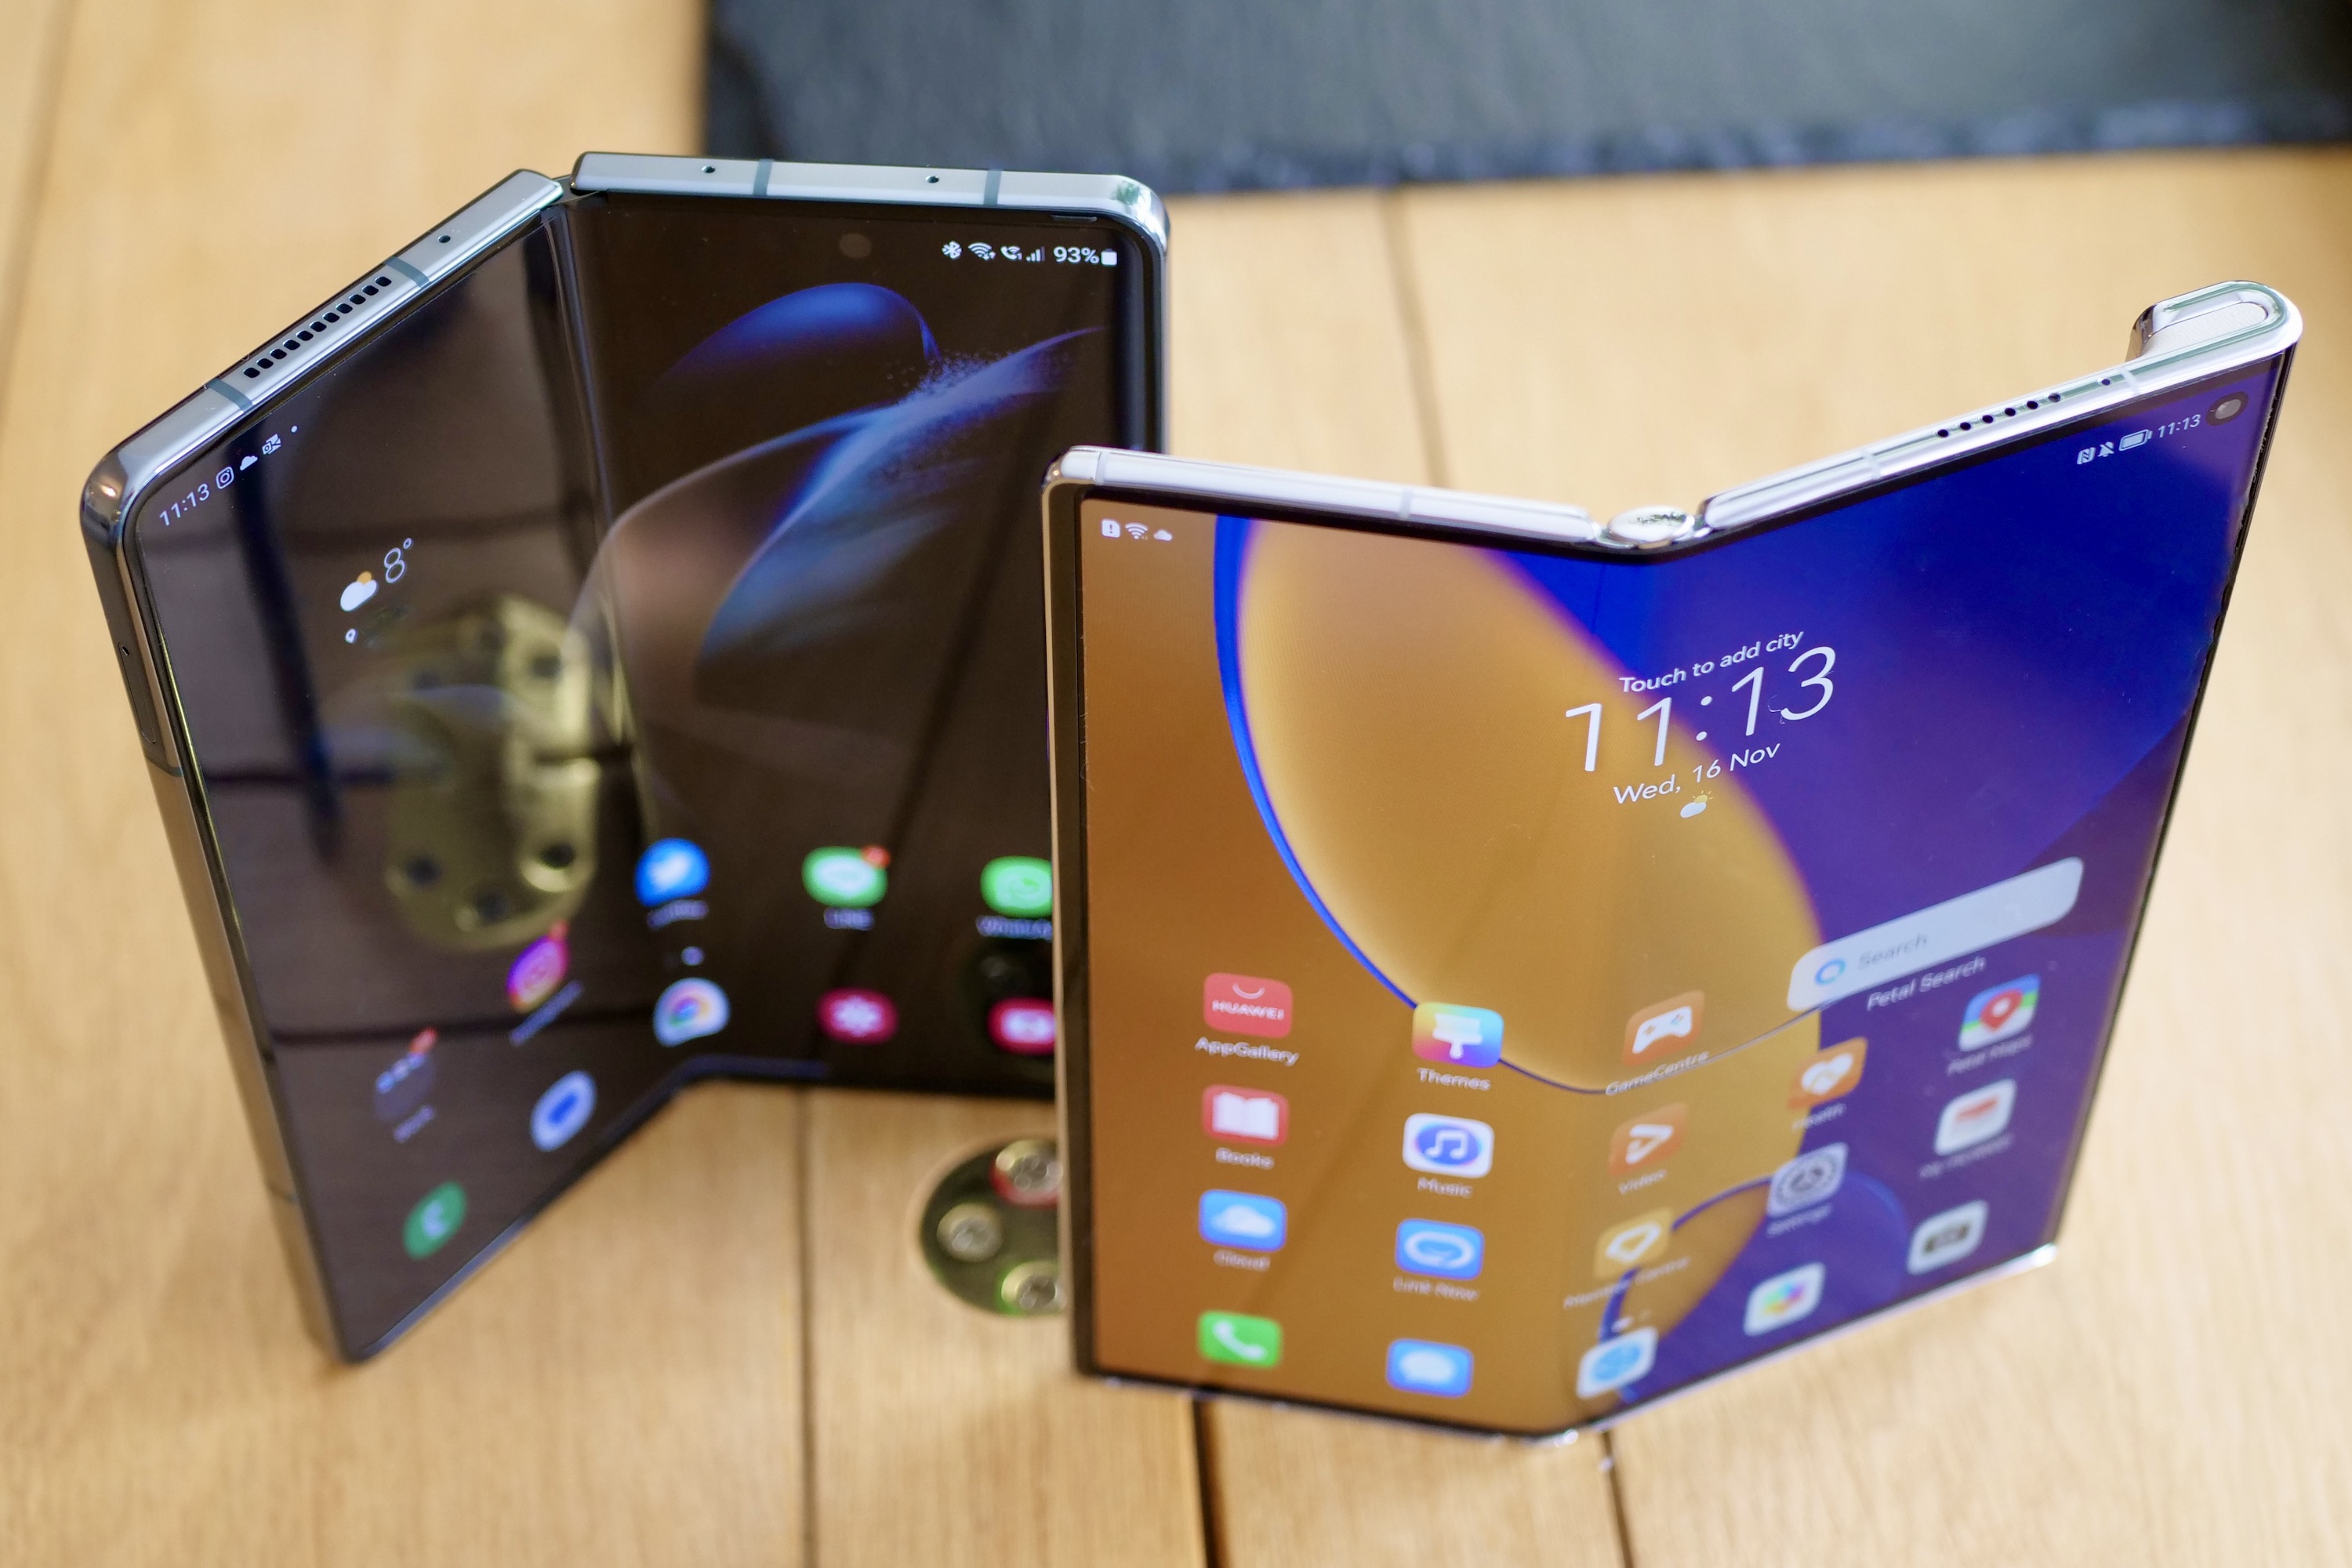 Galaxy Z Fold4 Folding Smartphone